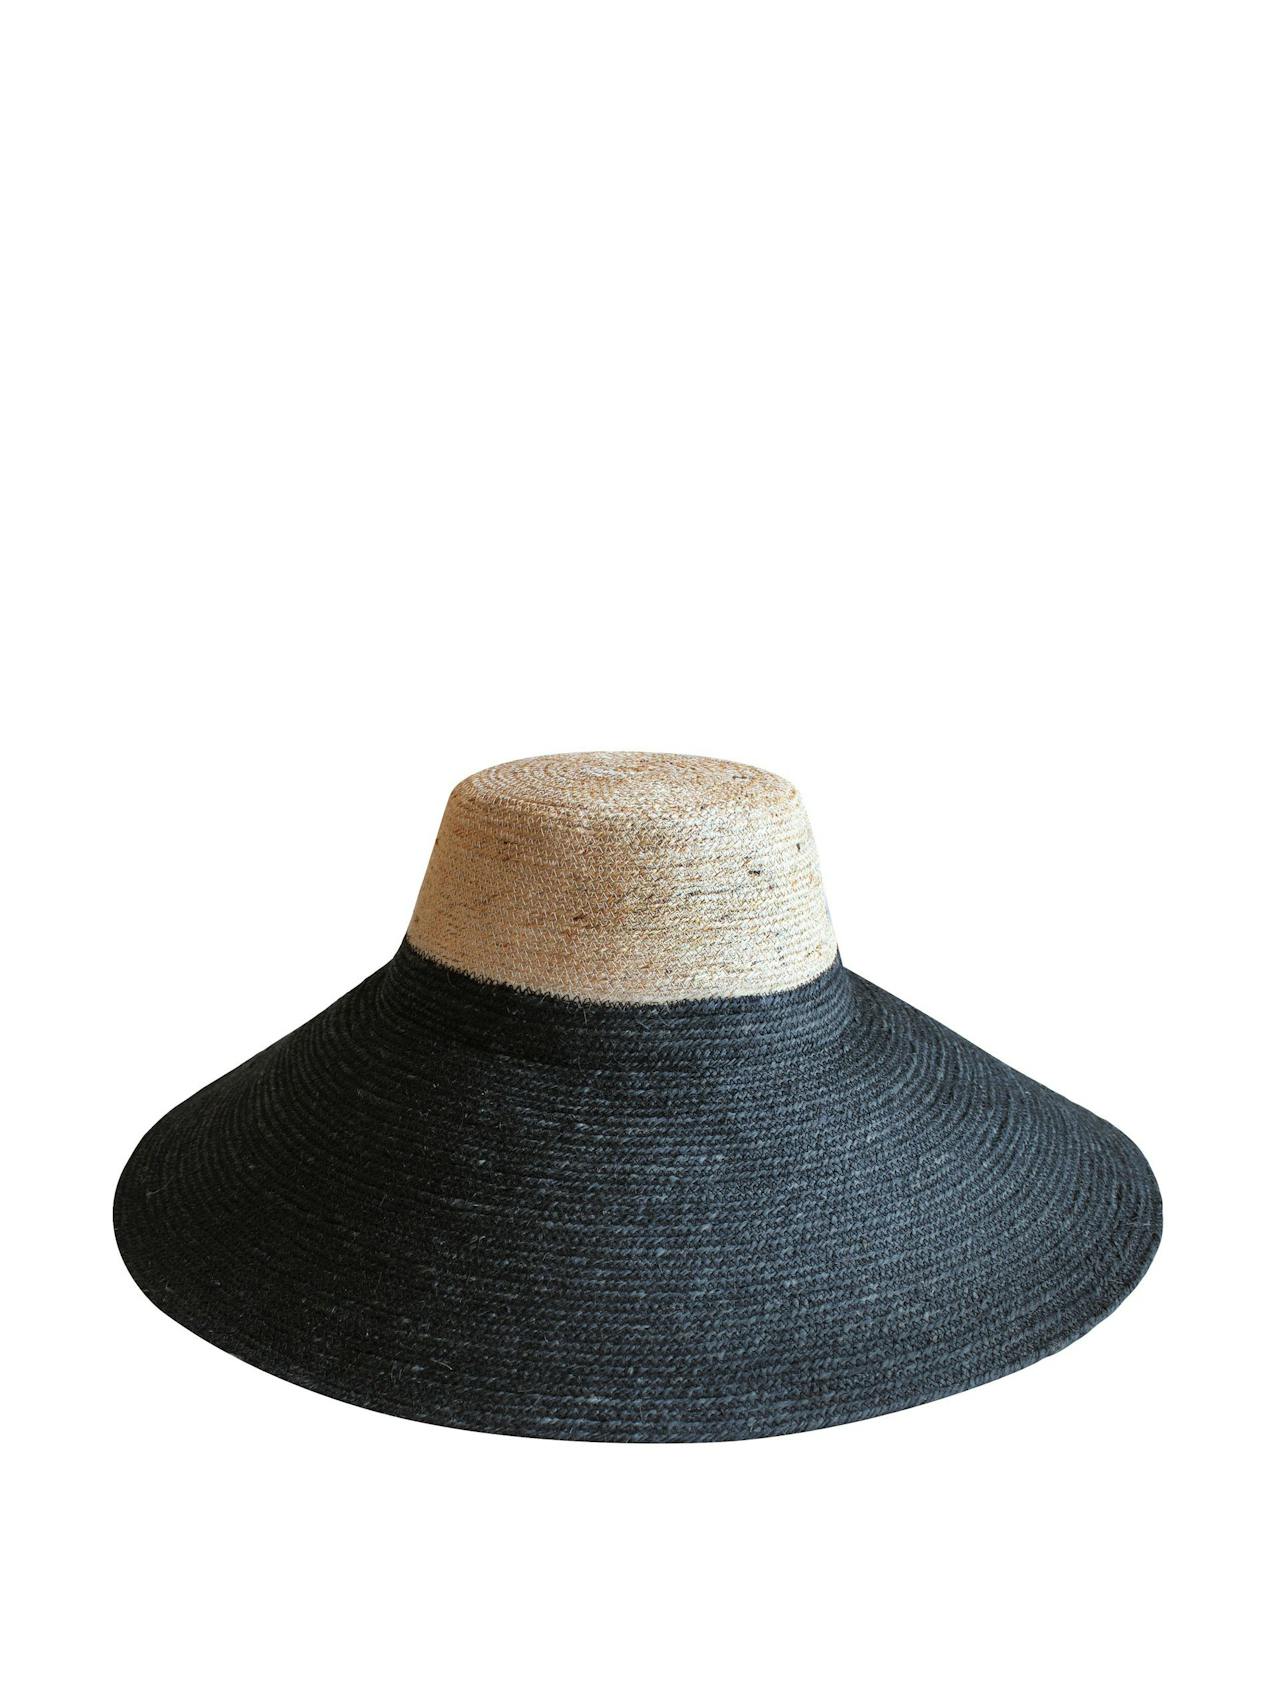 Riri duo jute handwoven straw hat in natural and black